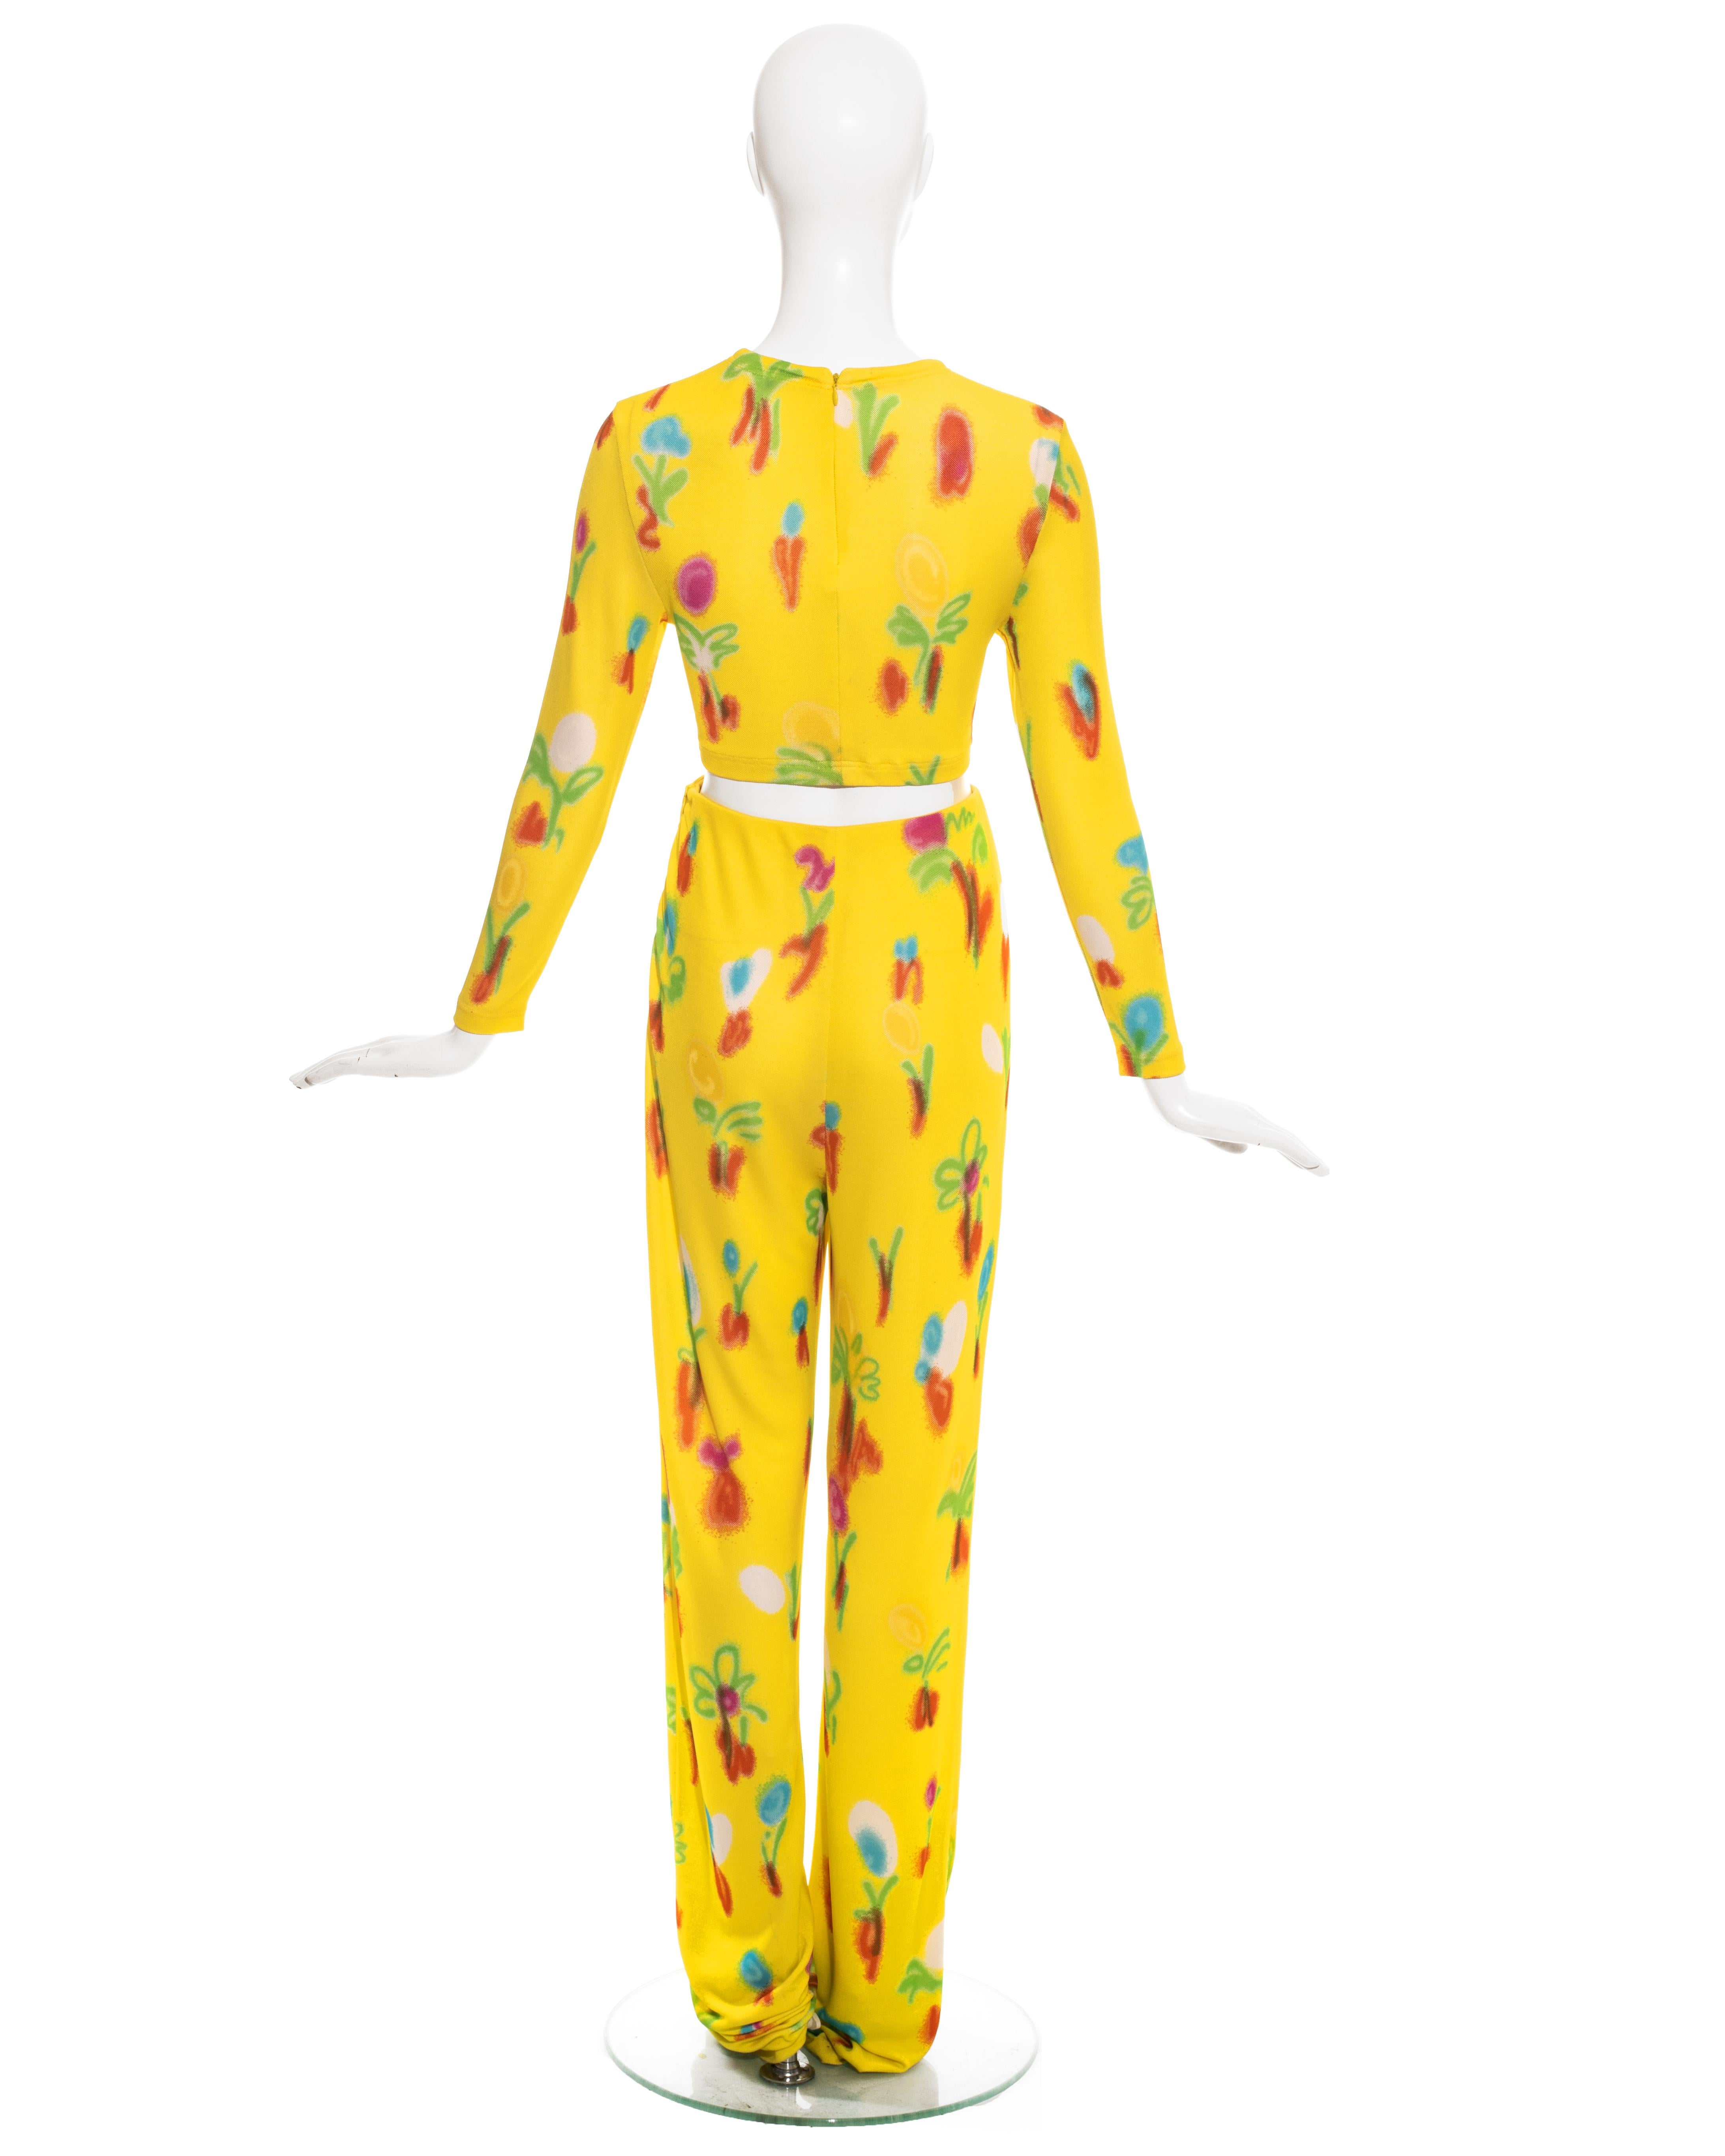 Gianni Versace yellow floral print jersey crop top and pants set, ss 1996 1